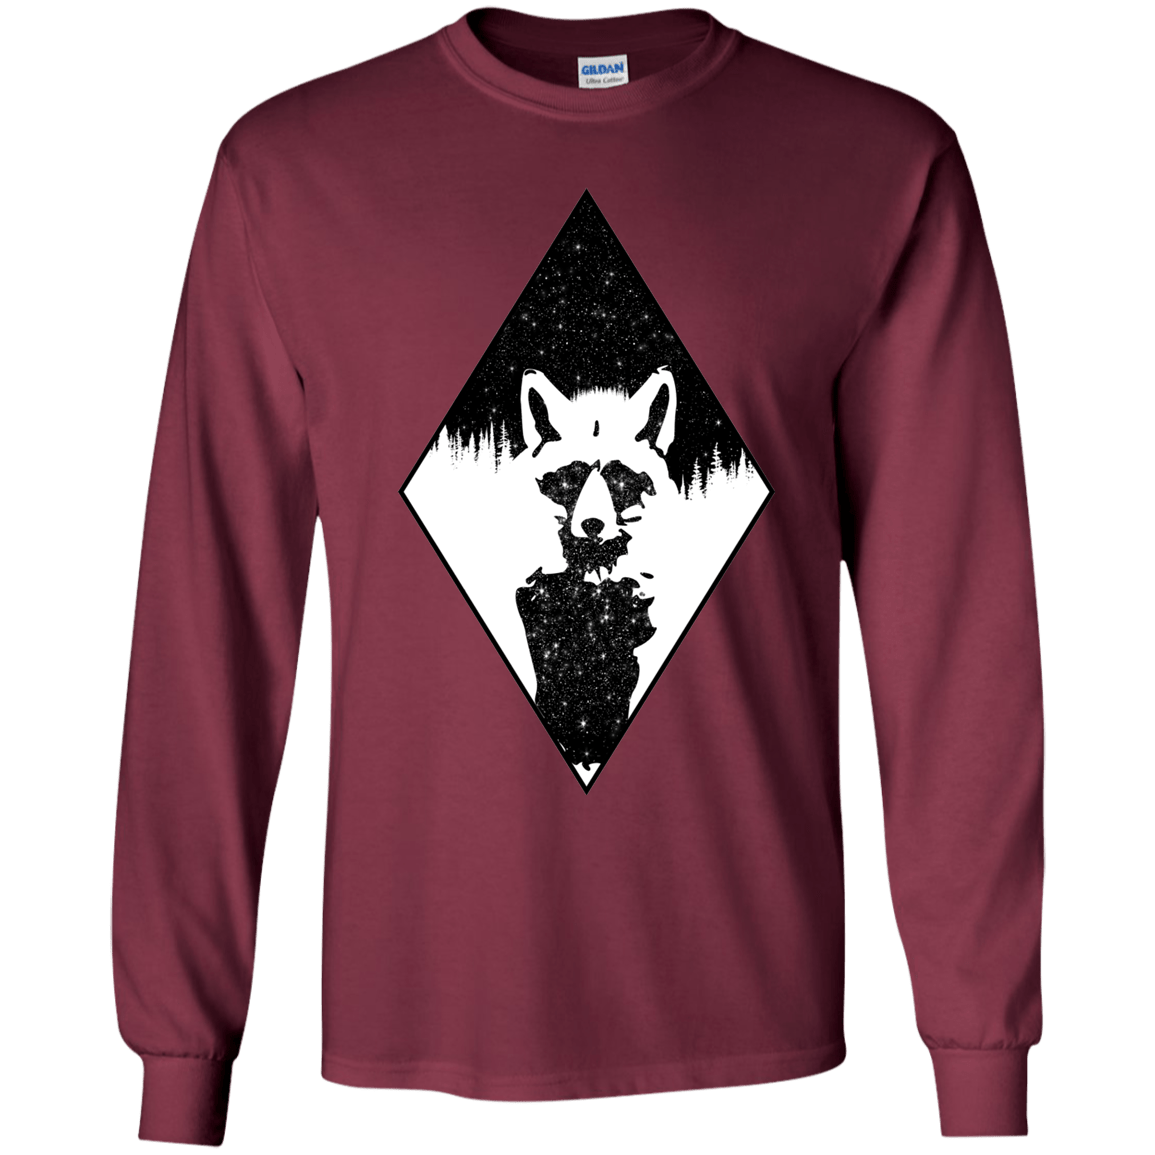 Starry Raccoon Youth Long Sleeve T-Shirt